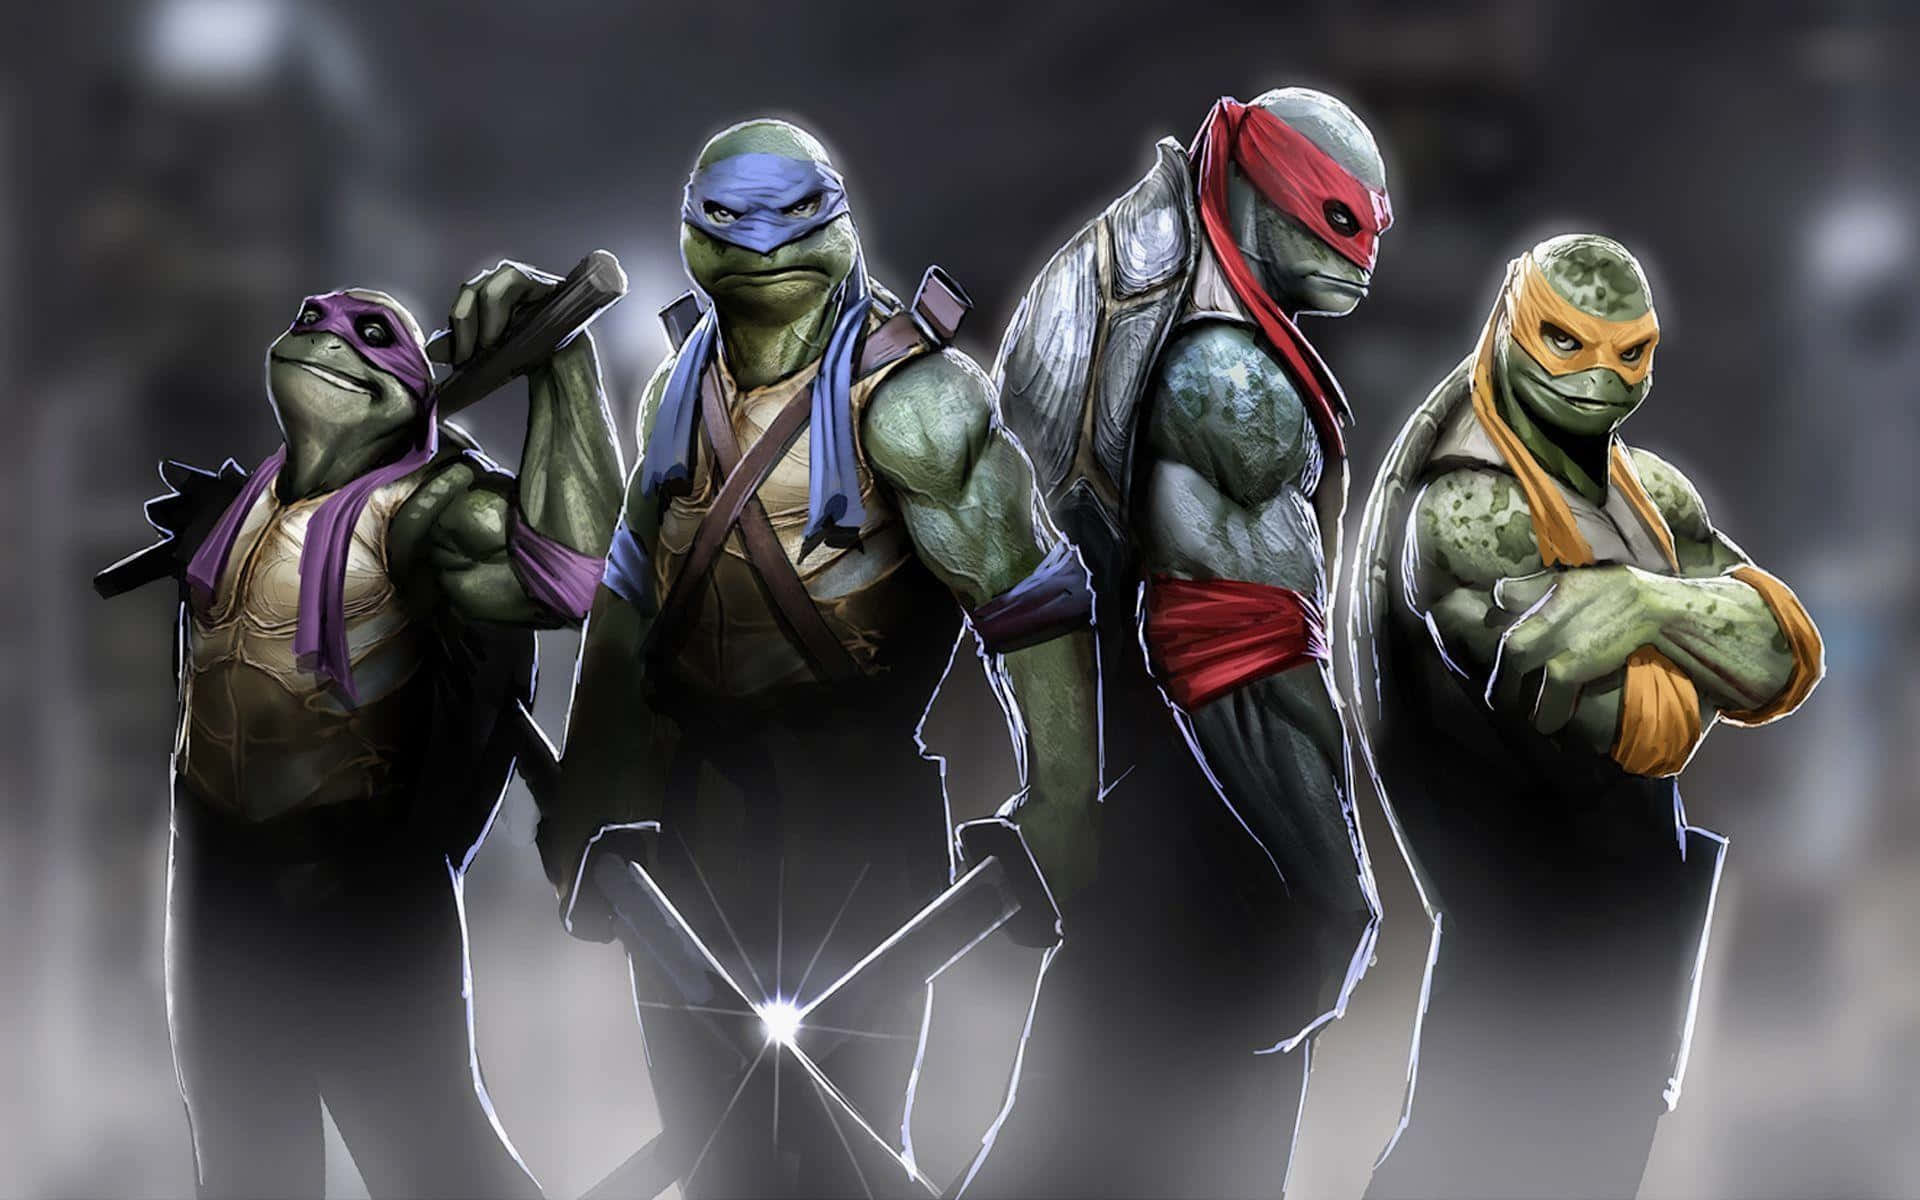 "The Fierce Ninja Turtles Ready for Action"